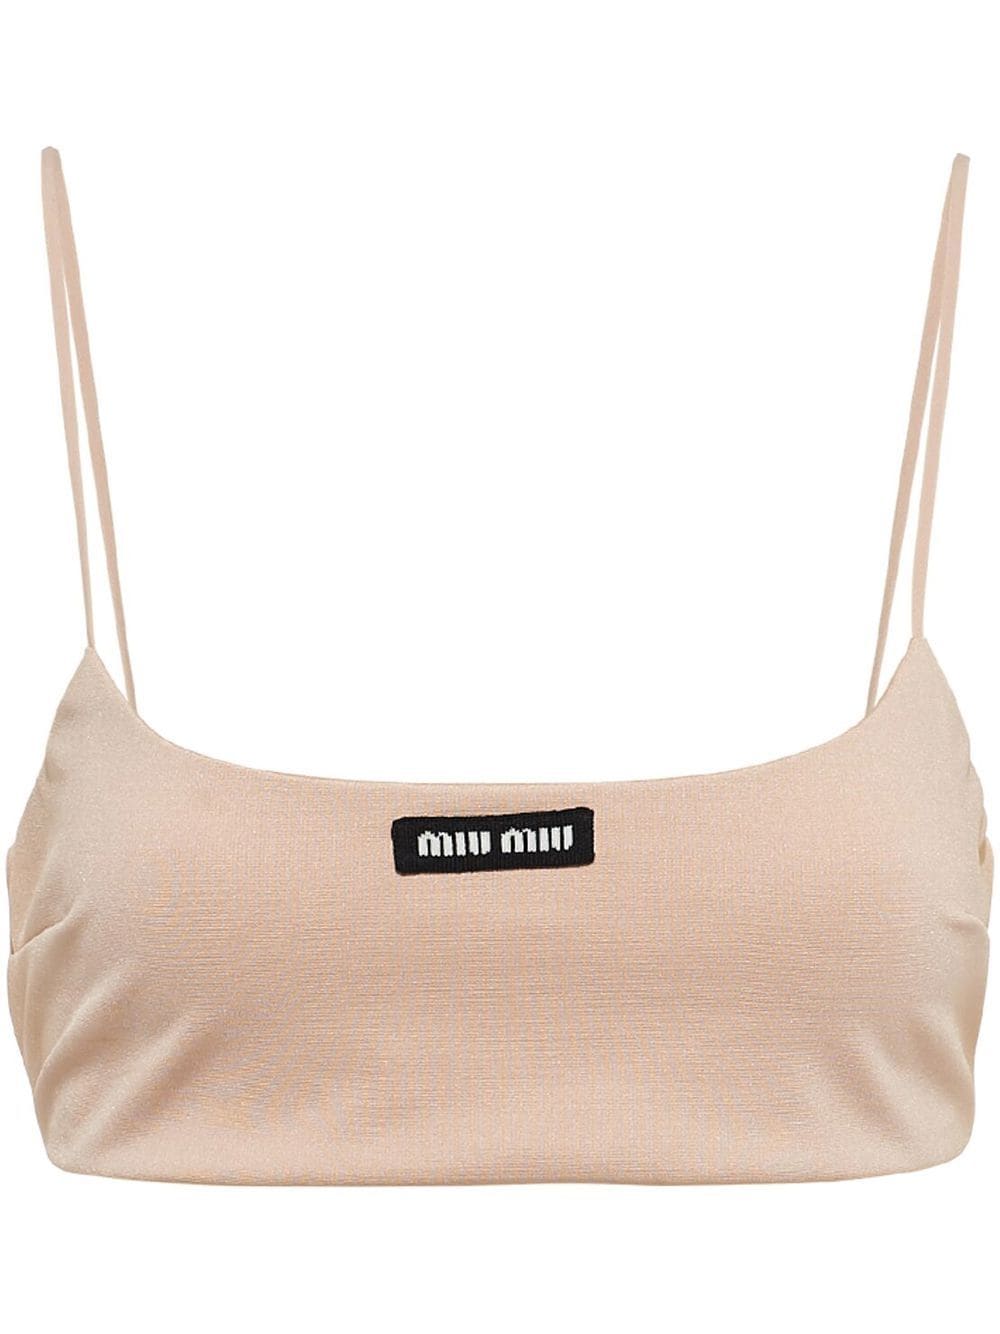 Miu Miu Miu Miu My Miu Shoulder Bag - Stylemyle